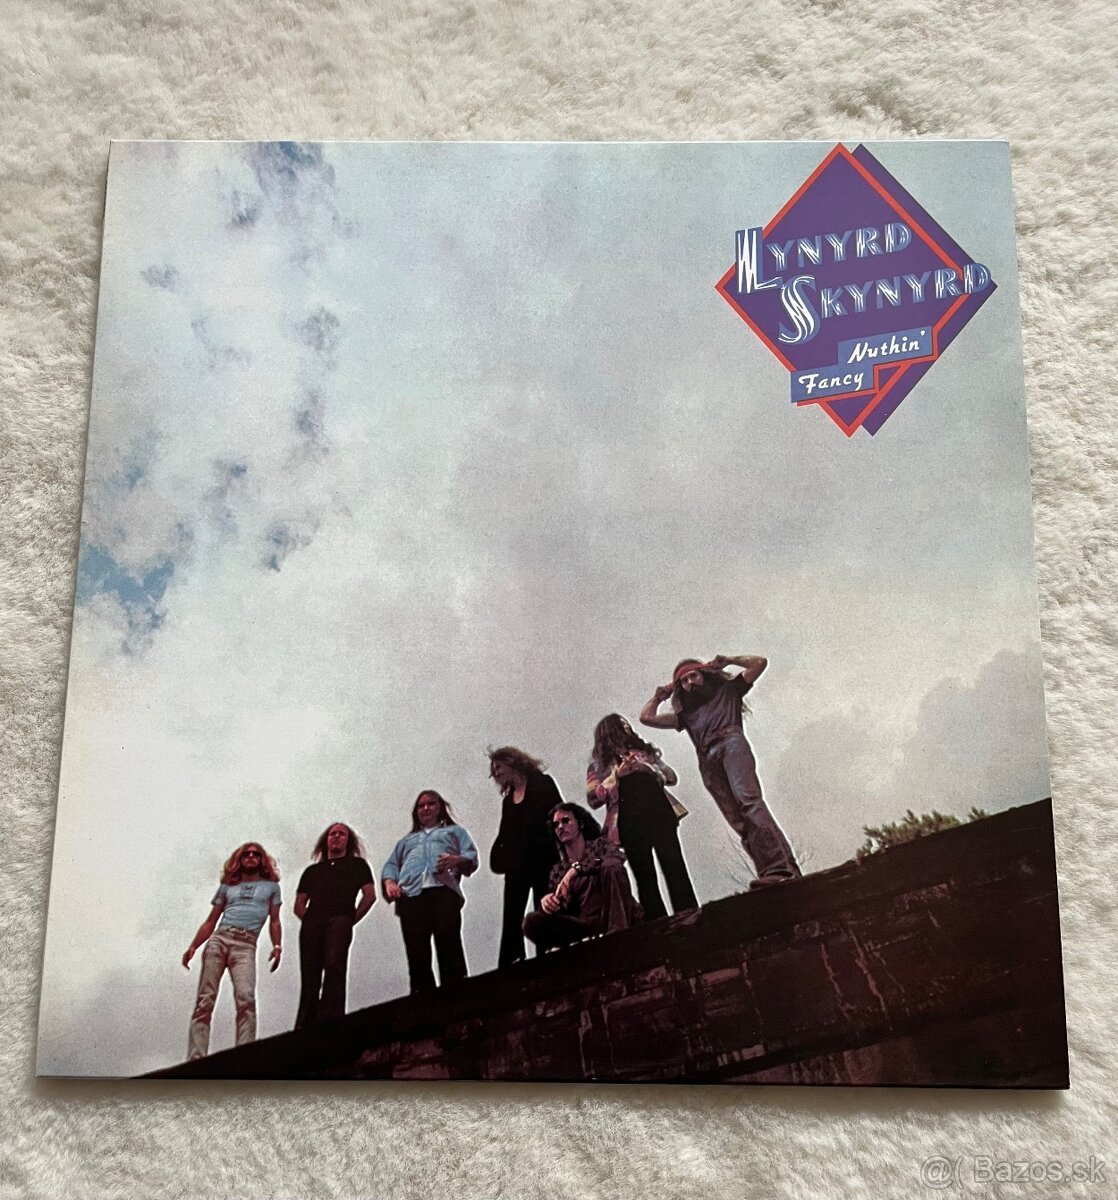 Lynyrd Skynyrd vinyl